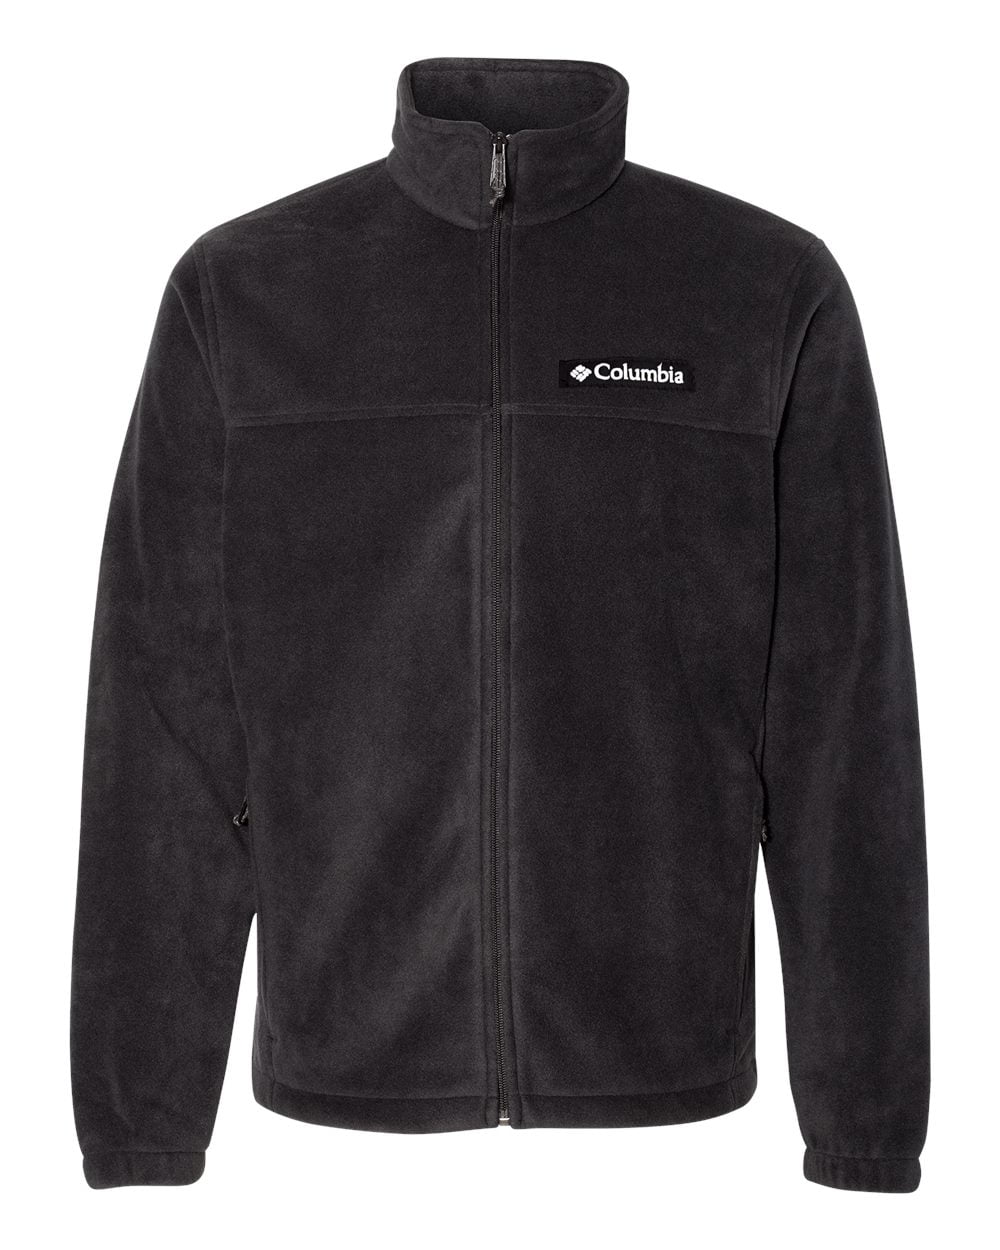 Mens 4x Columbia Fleece Jacket Sale Online | bellvalefarms.com